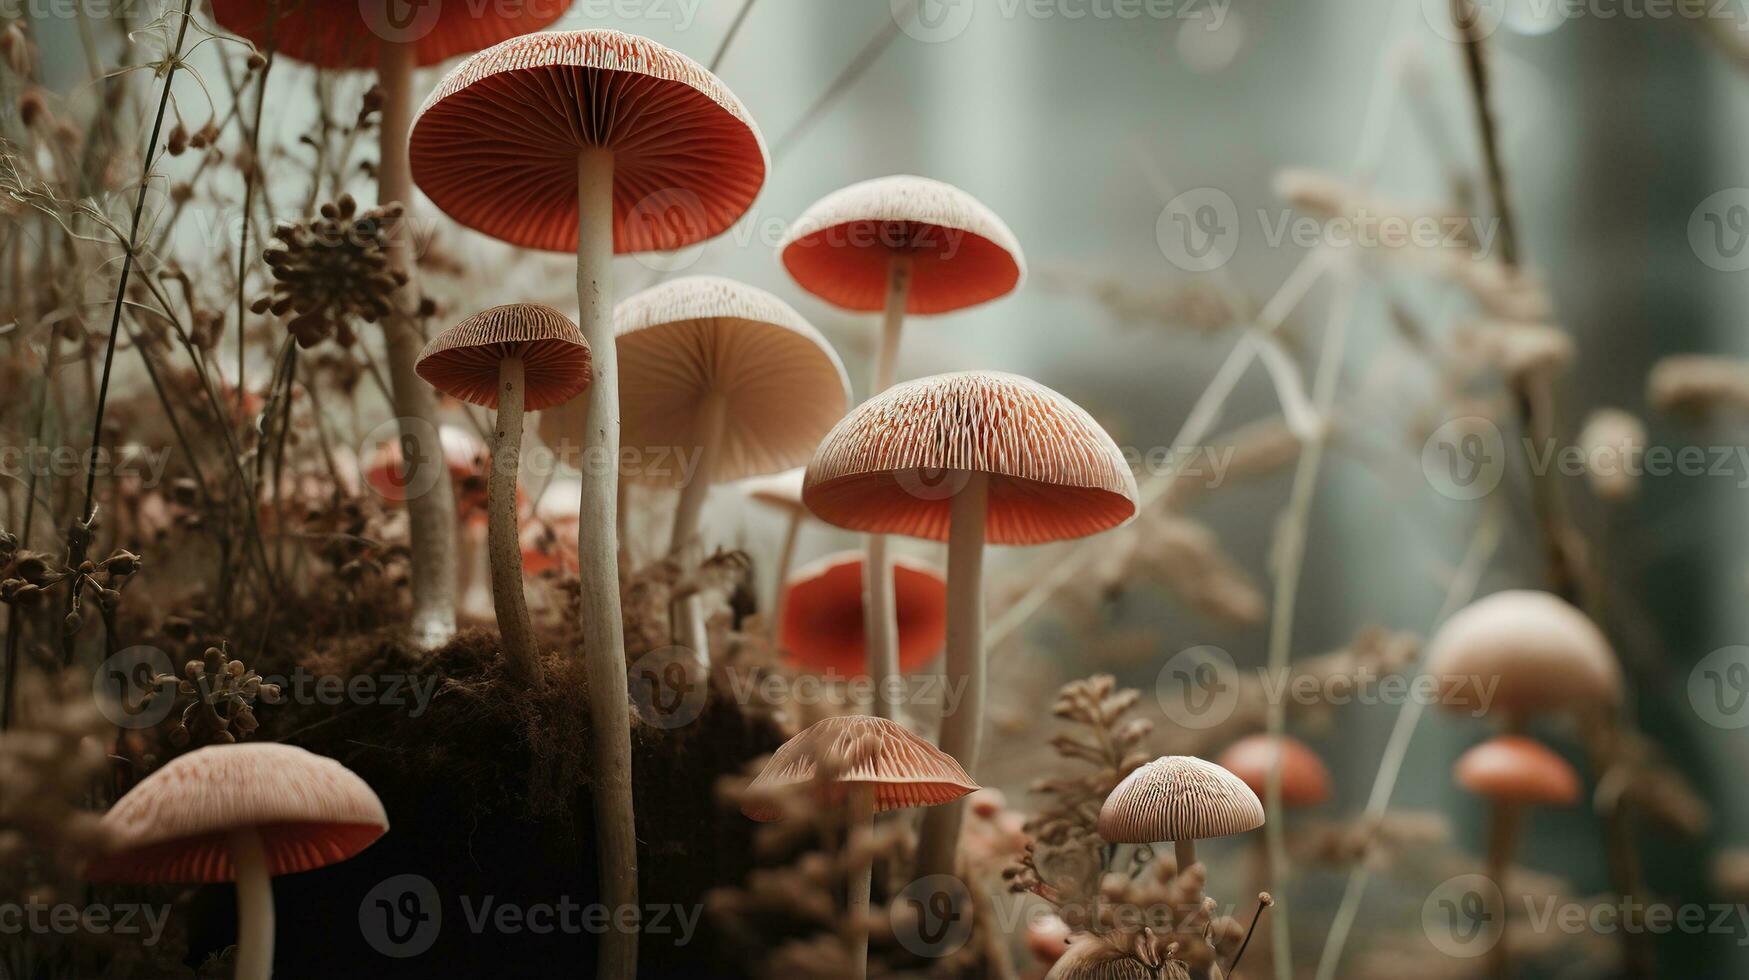 generativo ai, Fresco diferente hongos, otoño cosecha, estético apagado neutral colores foto